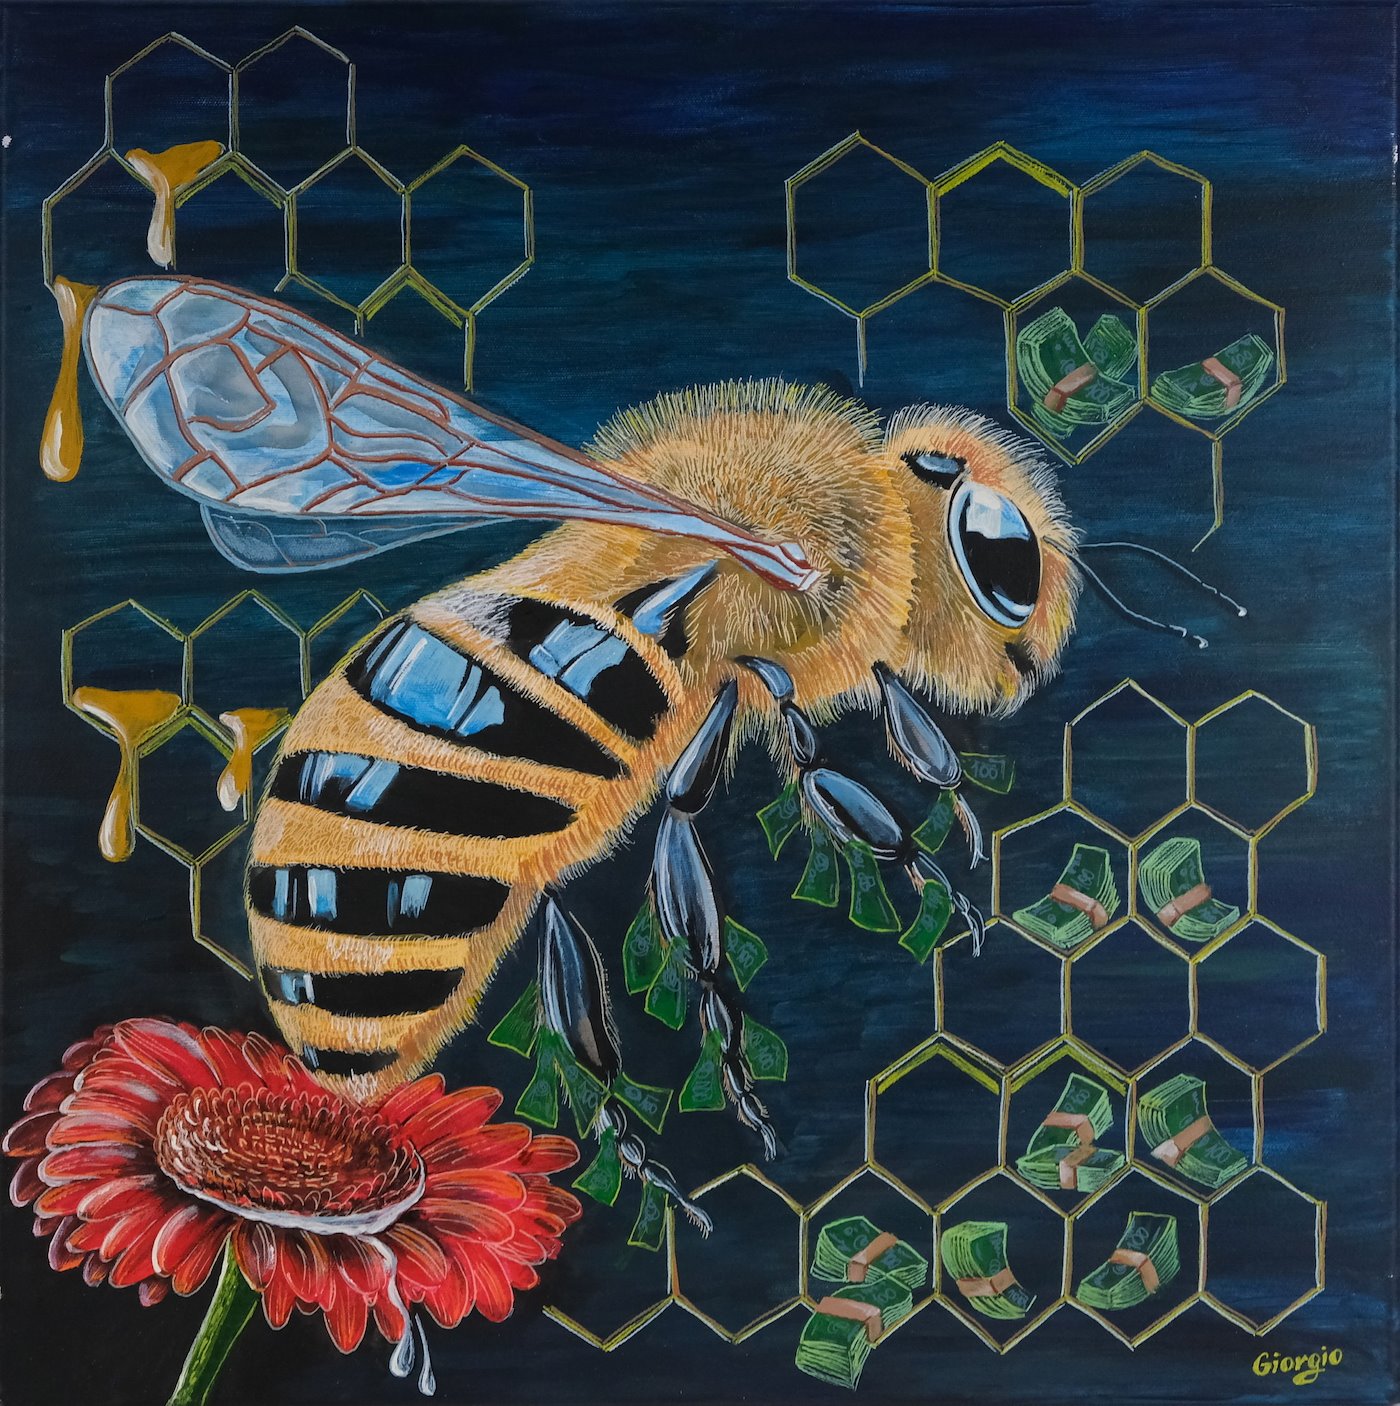 Giorgio - Včela konzumu